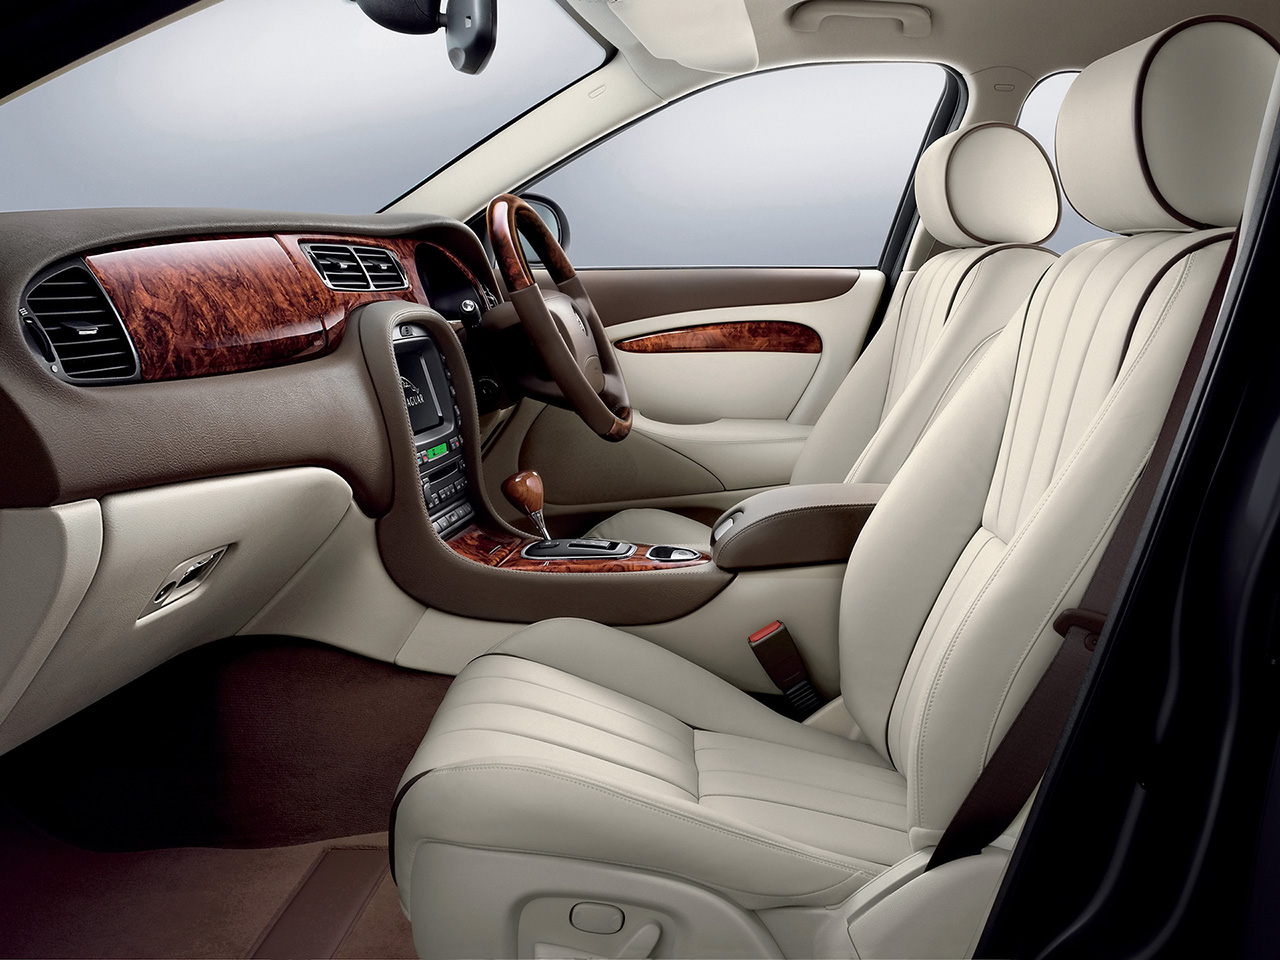  Jaguar s  type  interior Its My Car Club